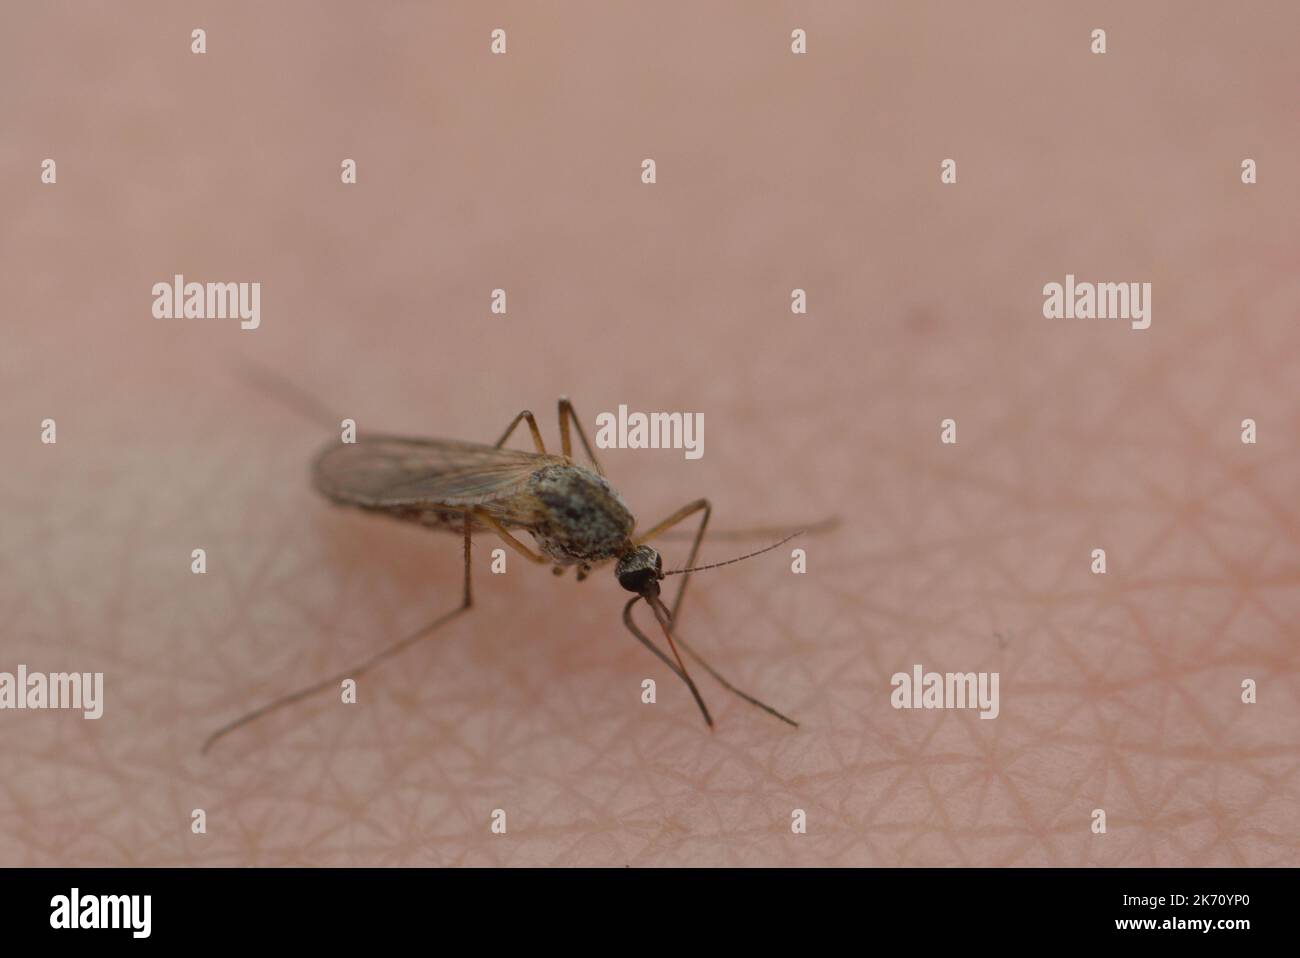 Female mosquito biting a human Stock Photo